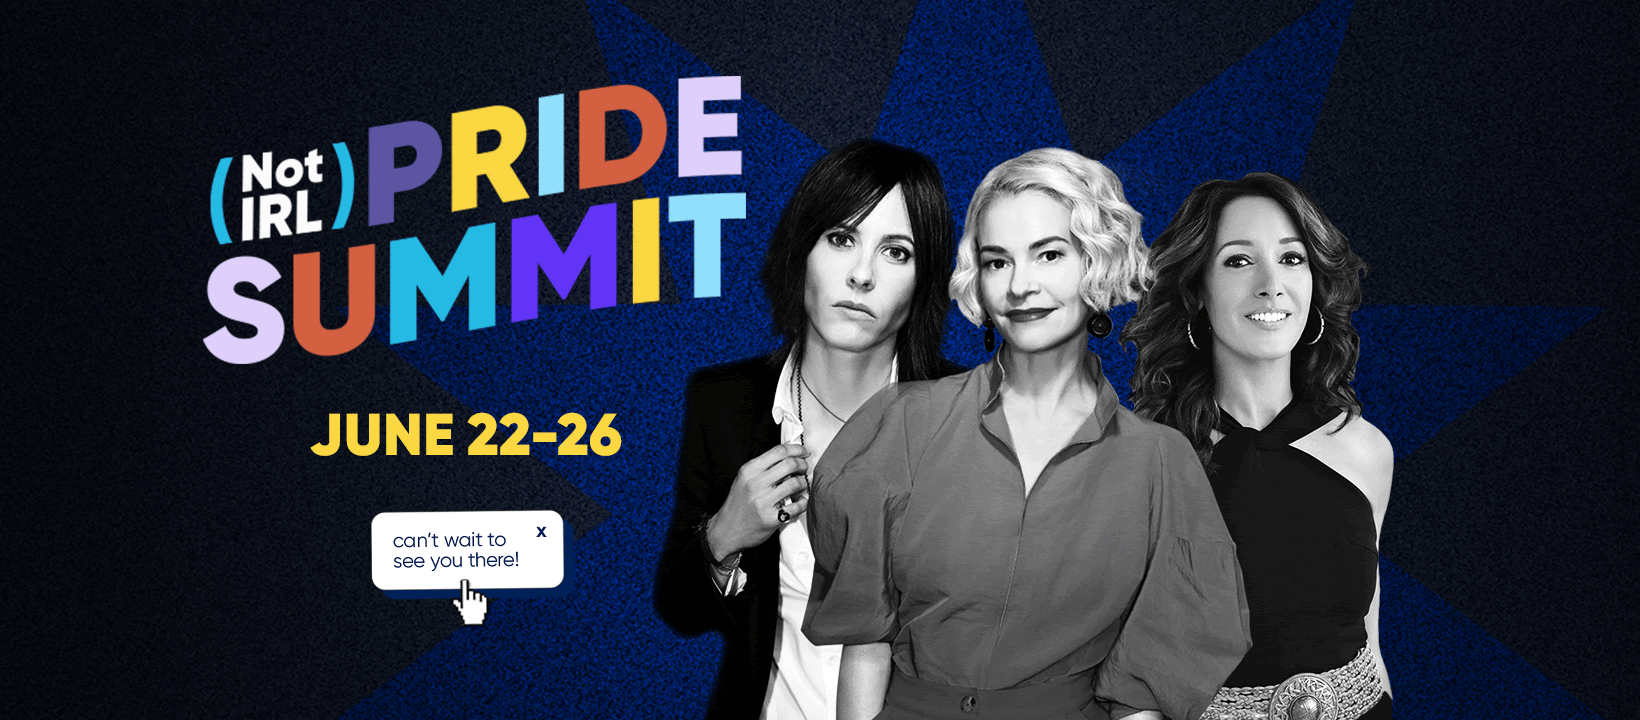 The (Not IRL) Pride Summit Leapfrog The New Revolution for Women